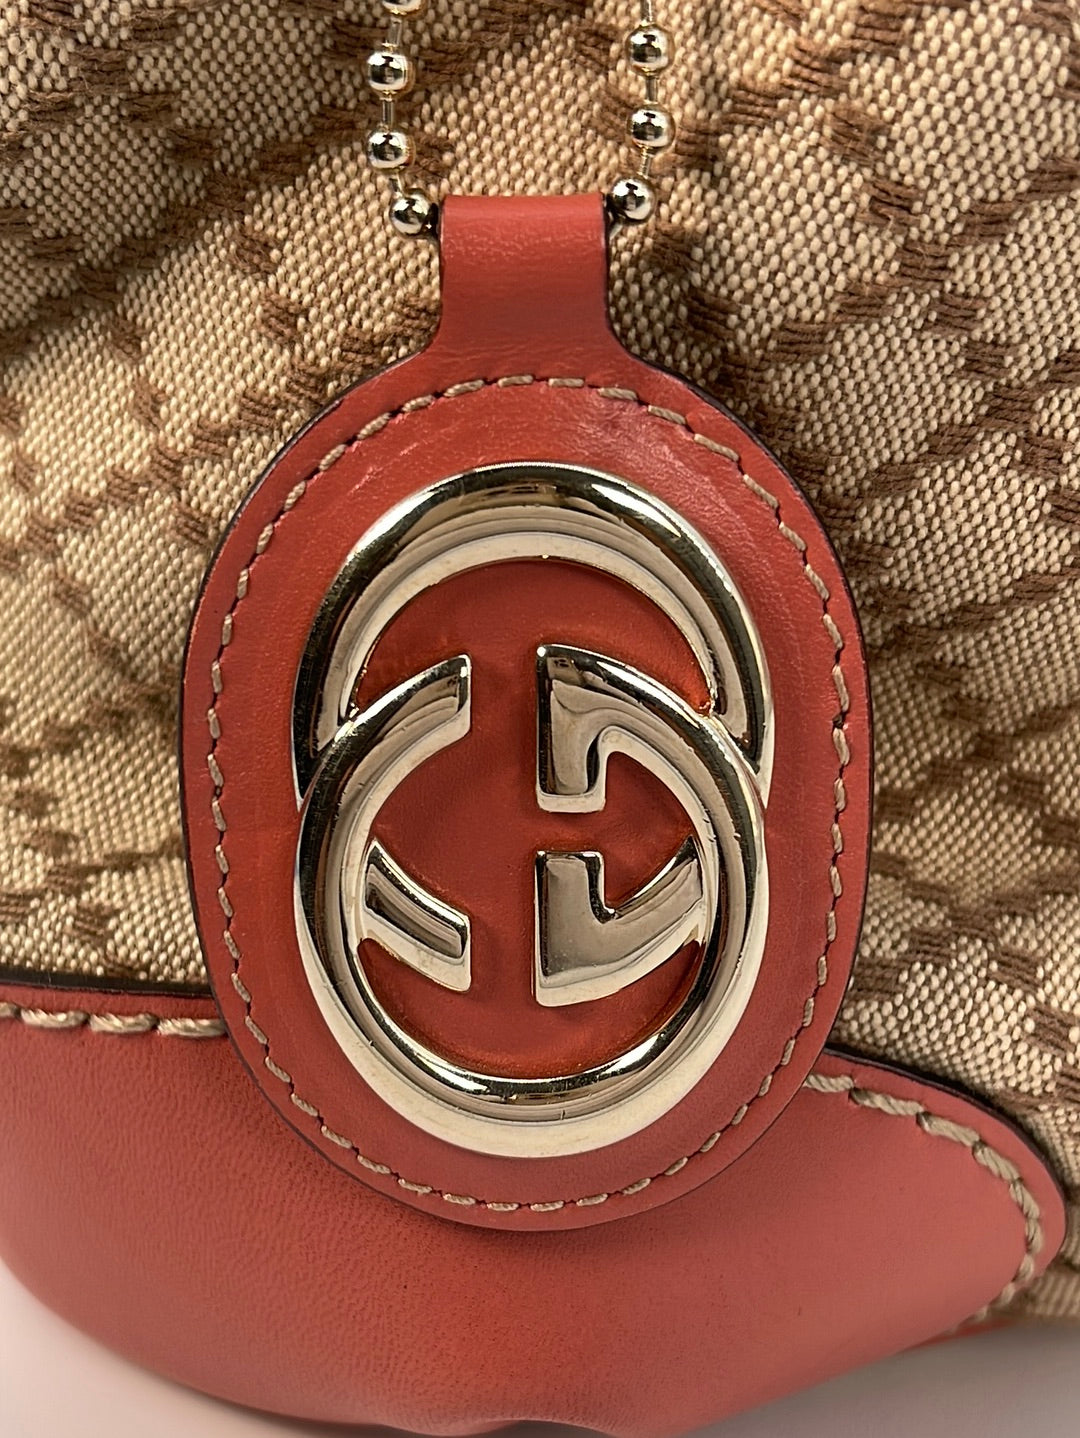 Preloved Gucci Beige Canvas Sukey Shoulder Bag with Coral Leather Trim 247902520981 033023